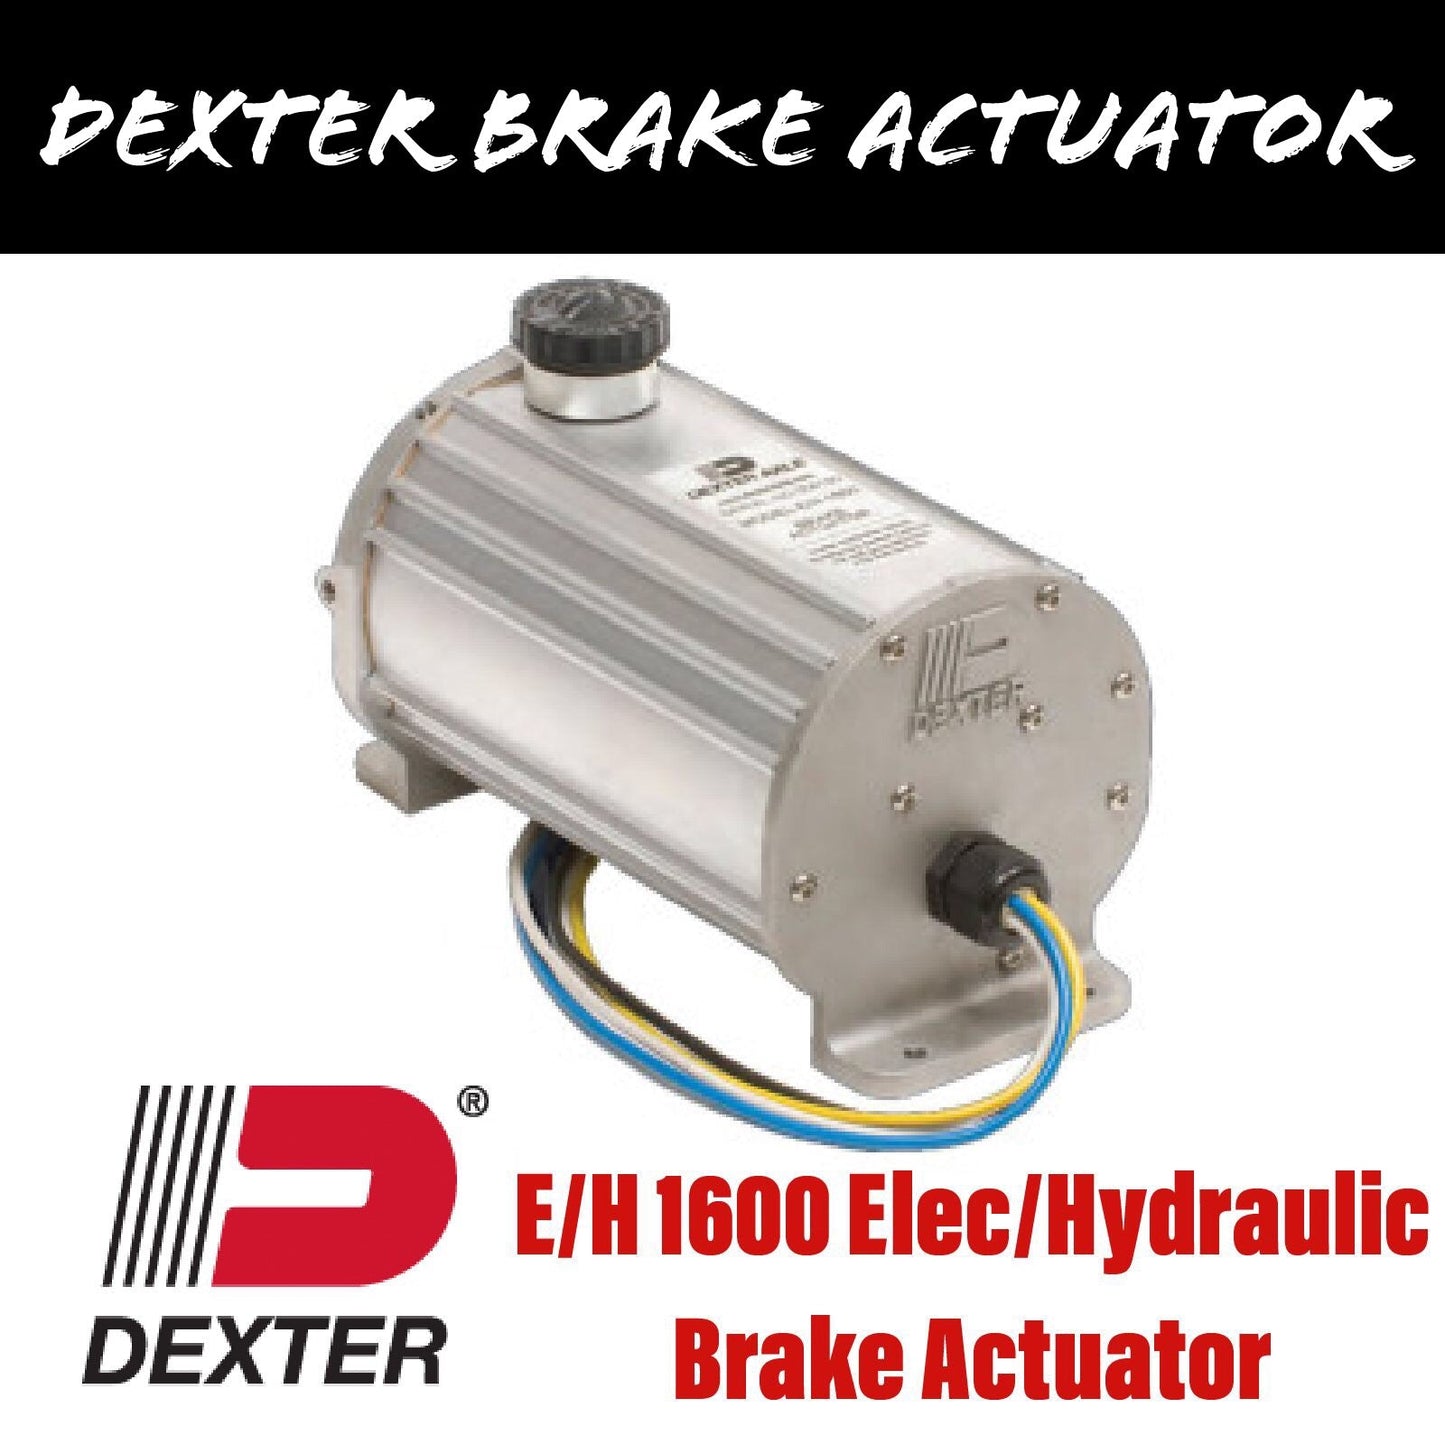 DEXTER E/H 1600 Electric/Hydraulic Brake Actuator